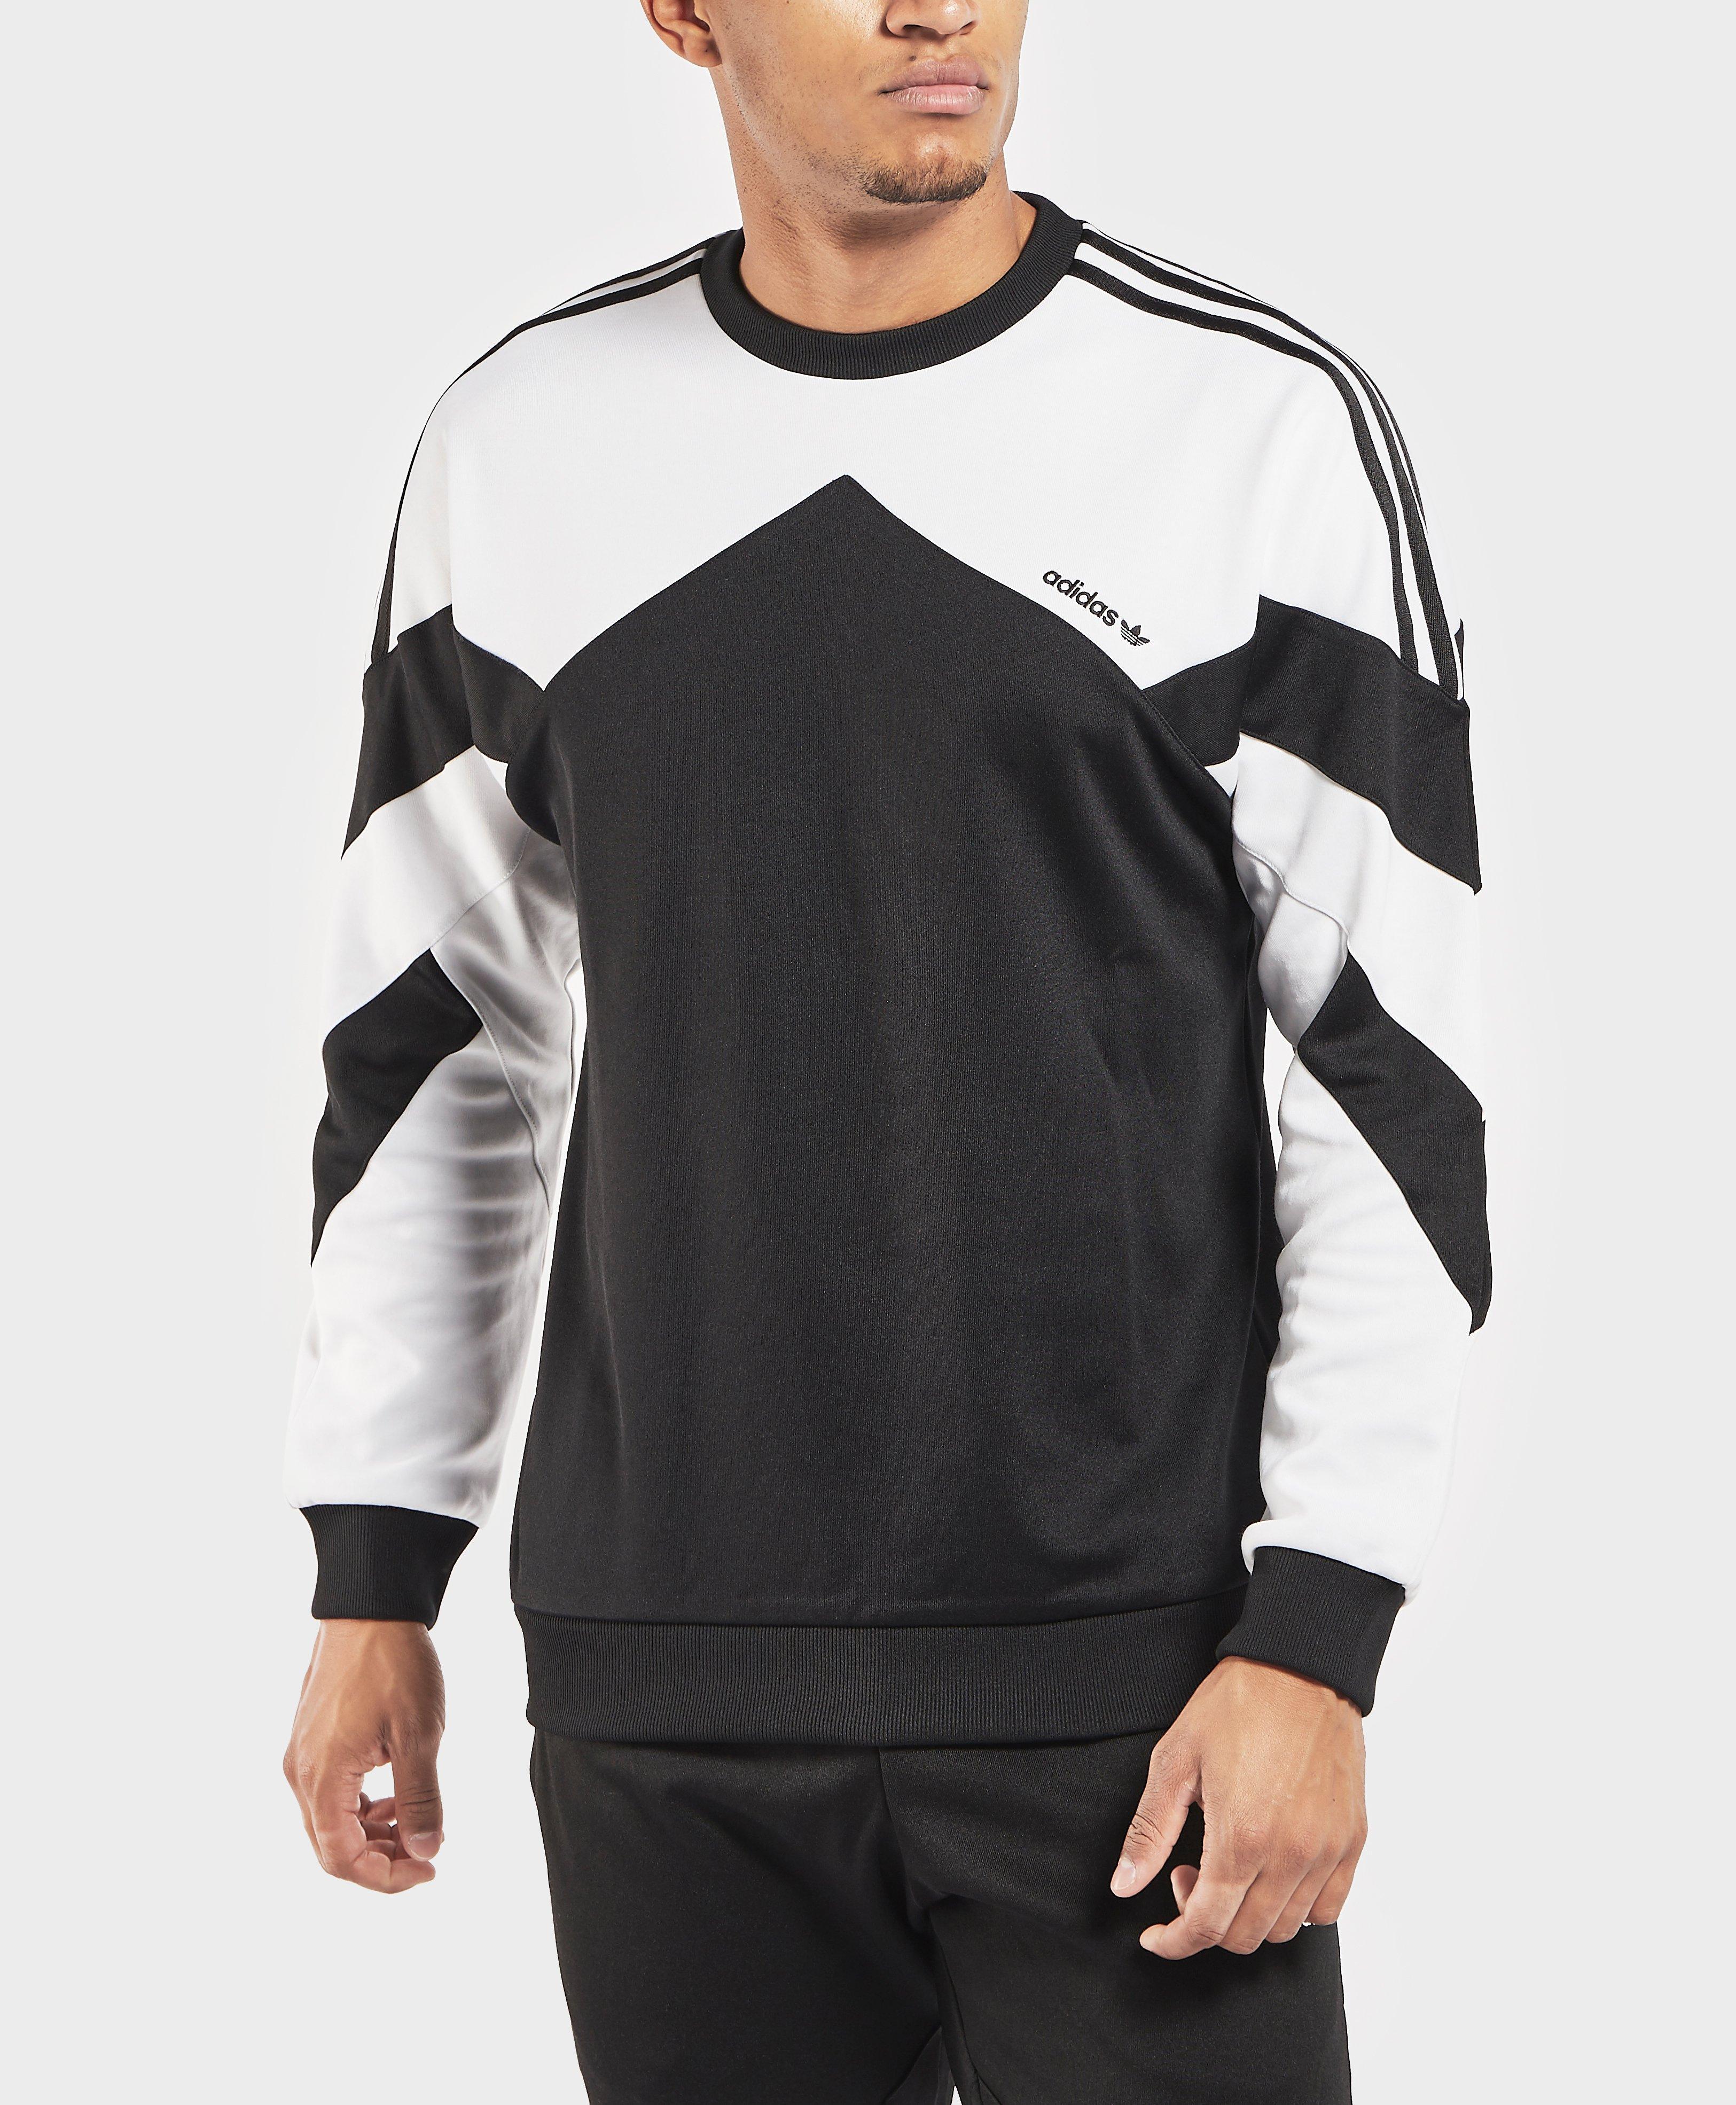 adidas Originals Palmeston Sweatshirt in Black for Men - Lyst